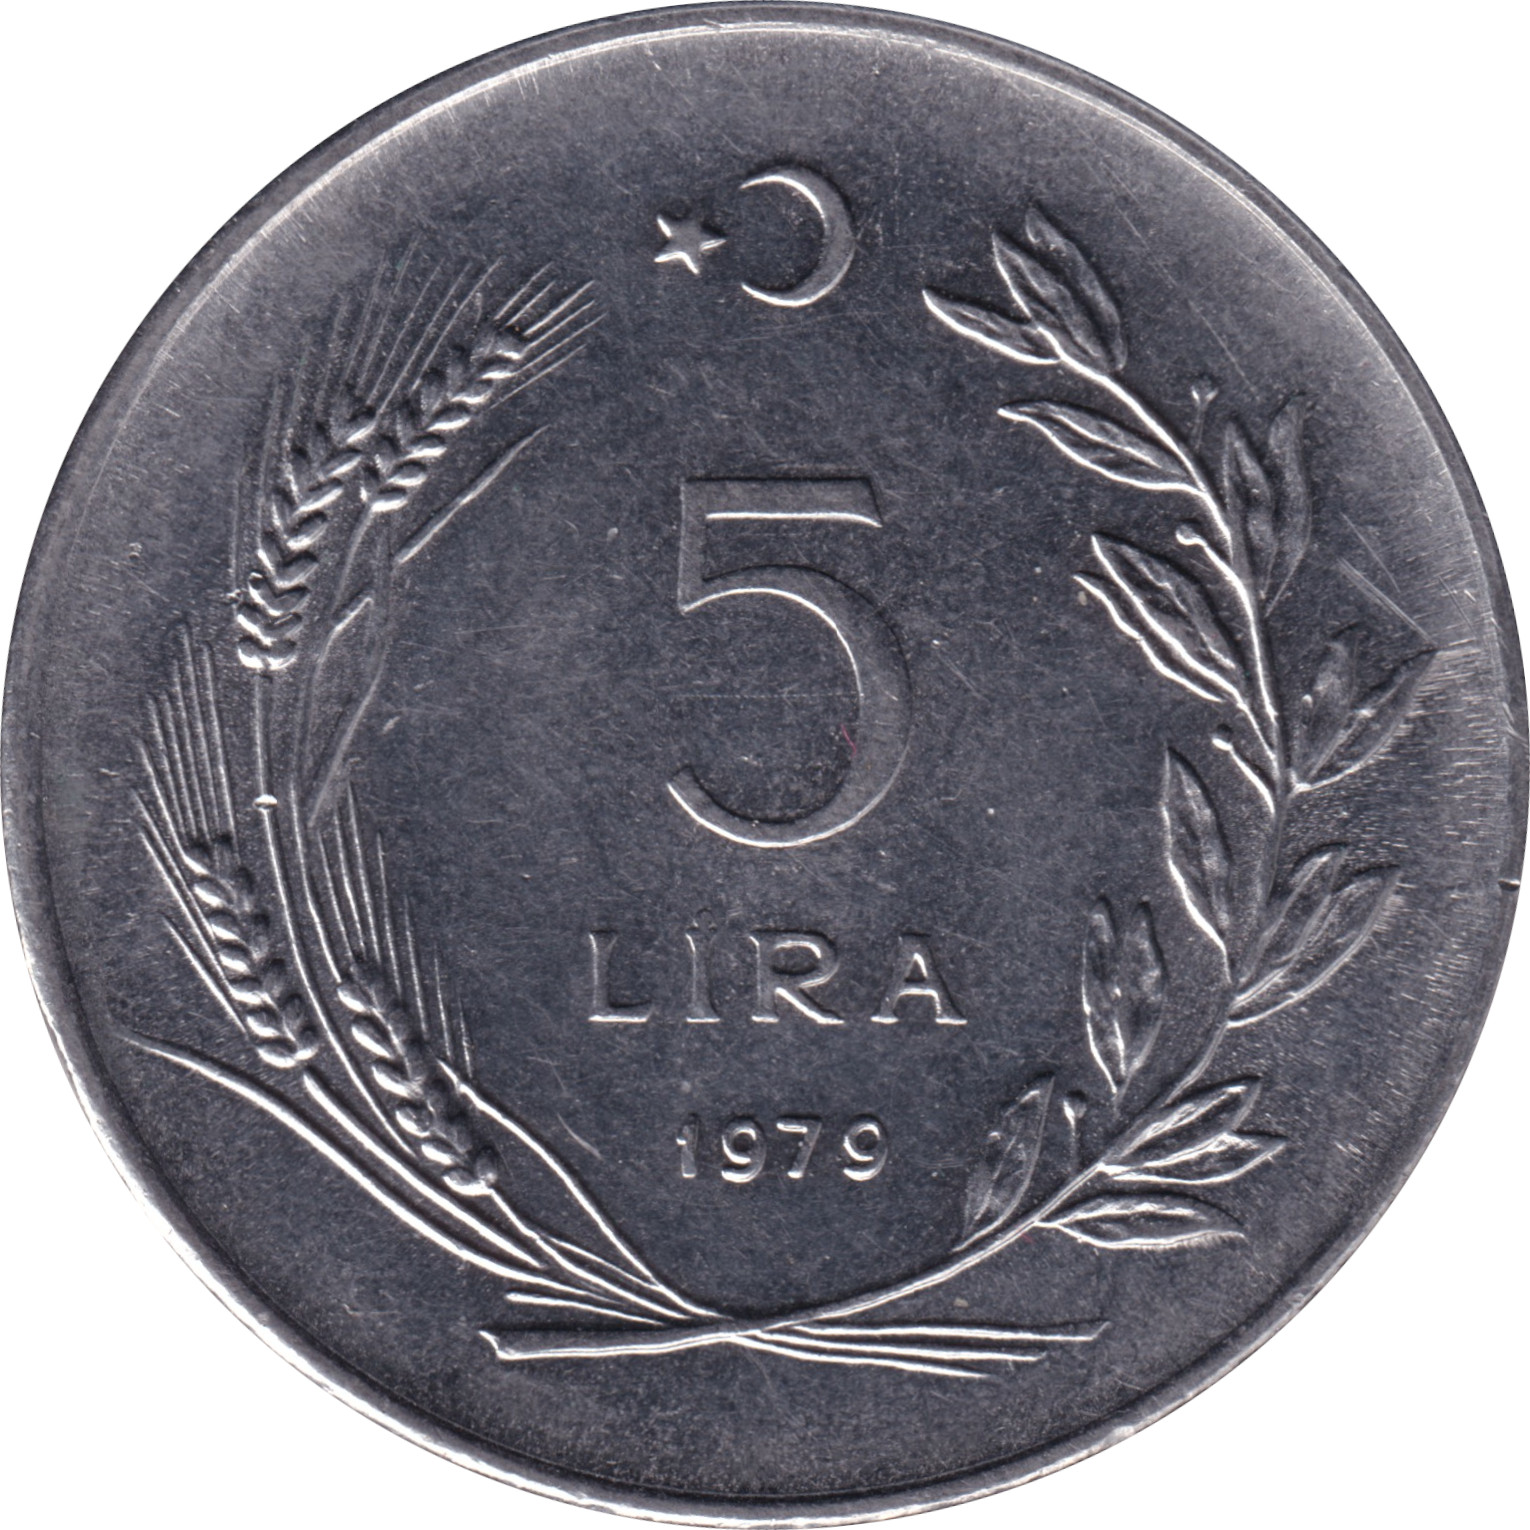 5 lira - Chevalier • Type 1